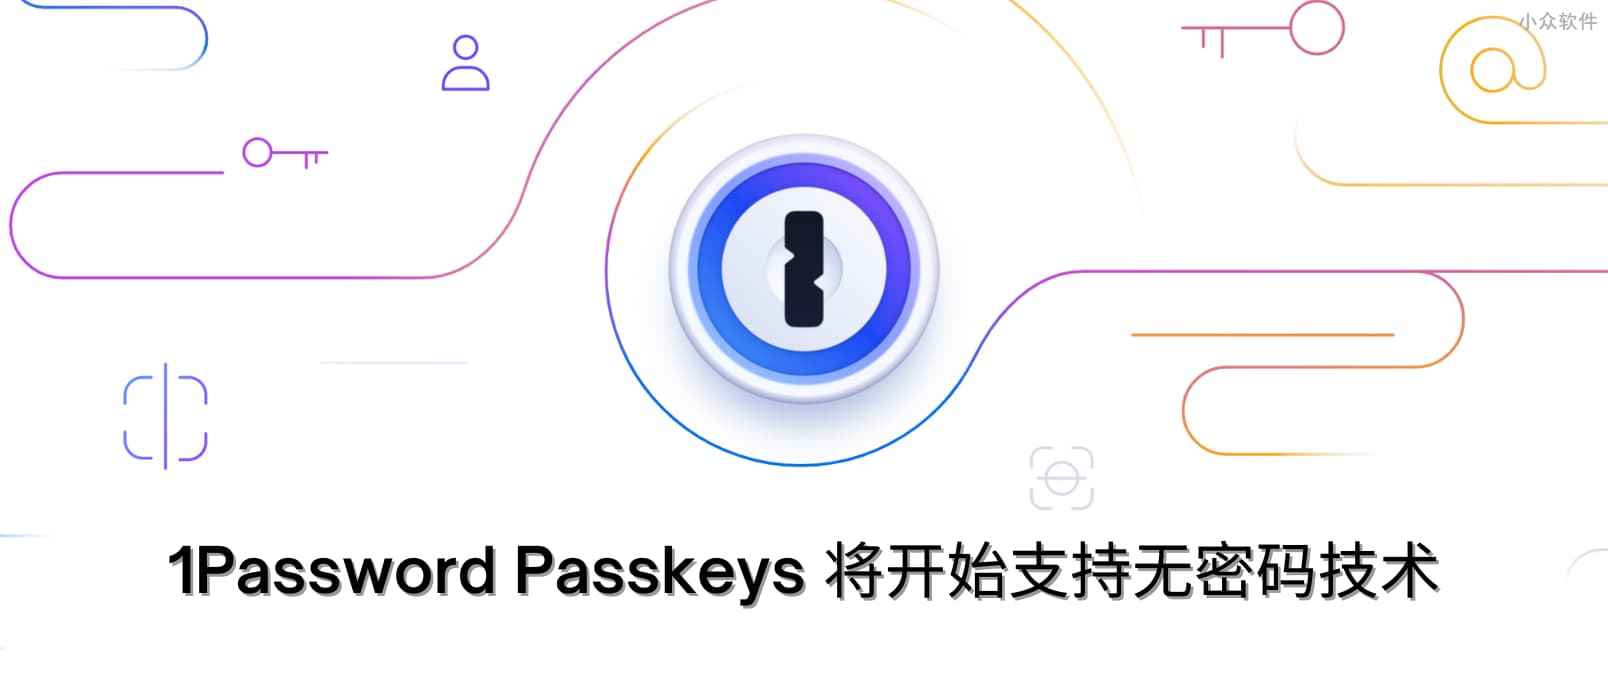 1Password Passkeys 将在 2023 年初开始支持无密码技术